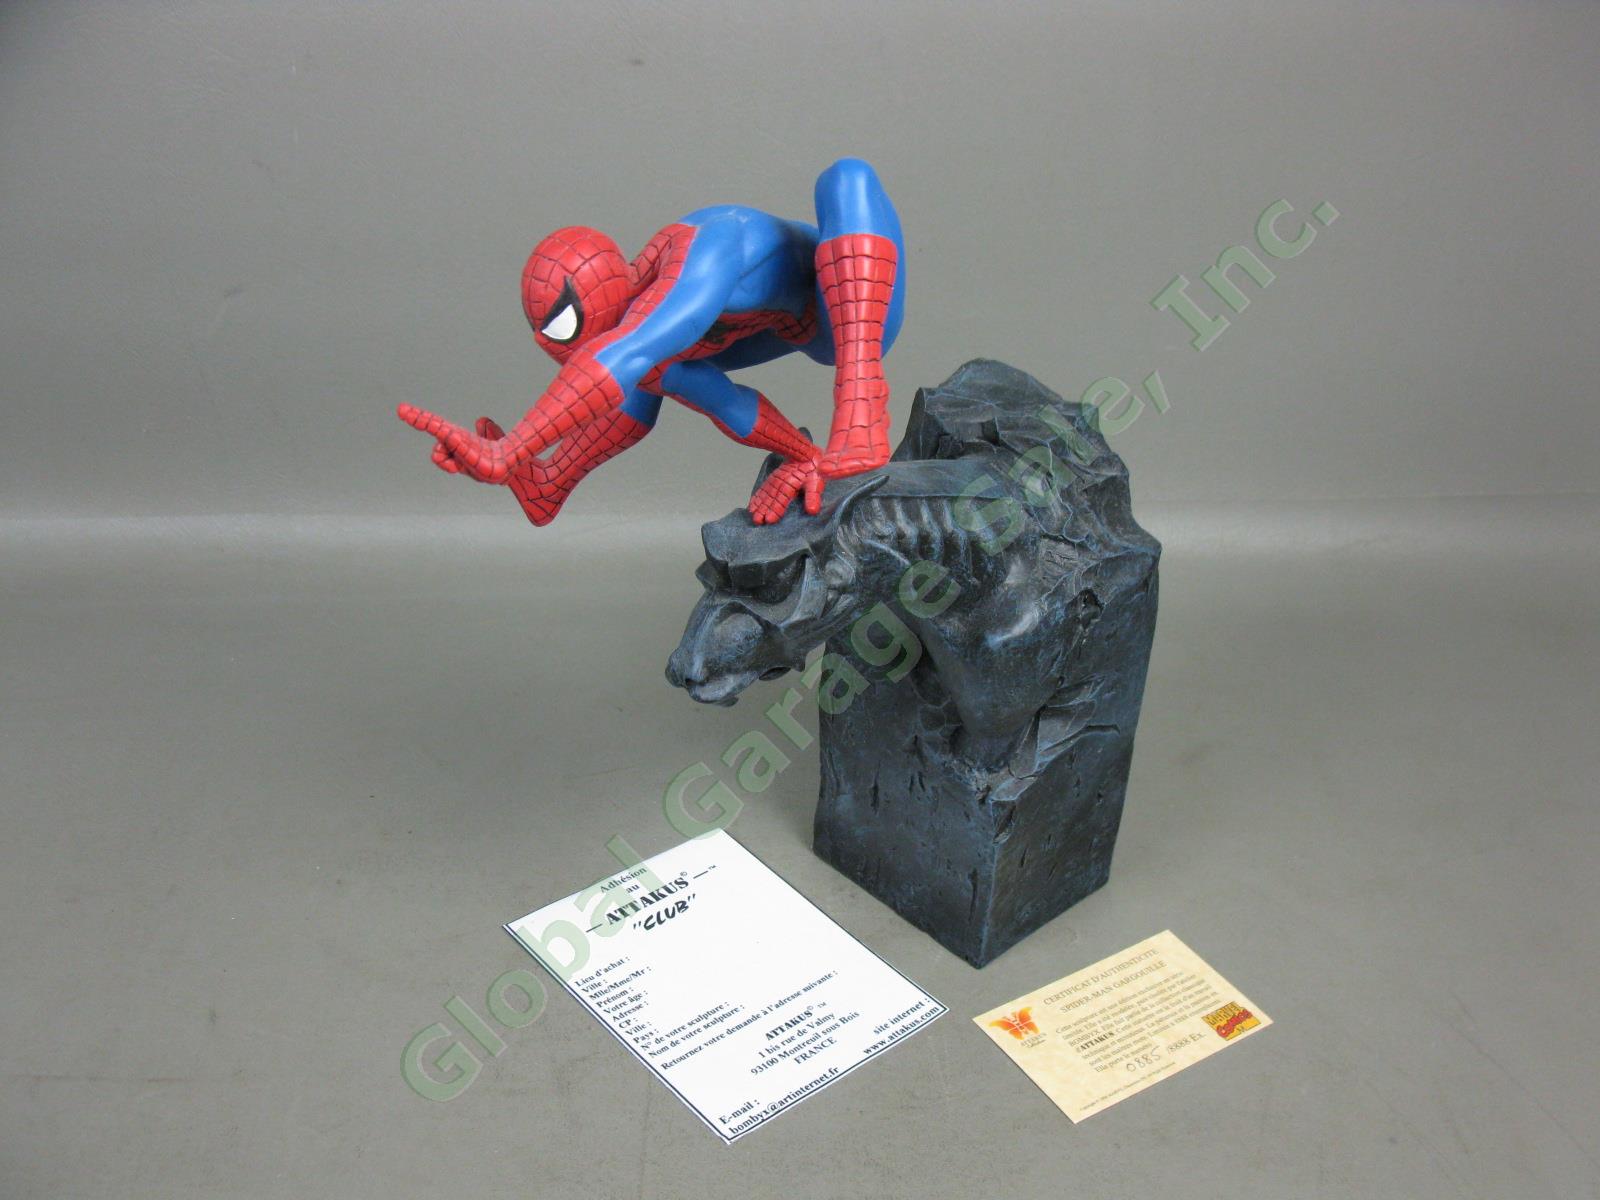 NIB 1997 Attakus Marvel Comics Spiderman Gargoyle Porcelain Statue C400 Bombyx 3